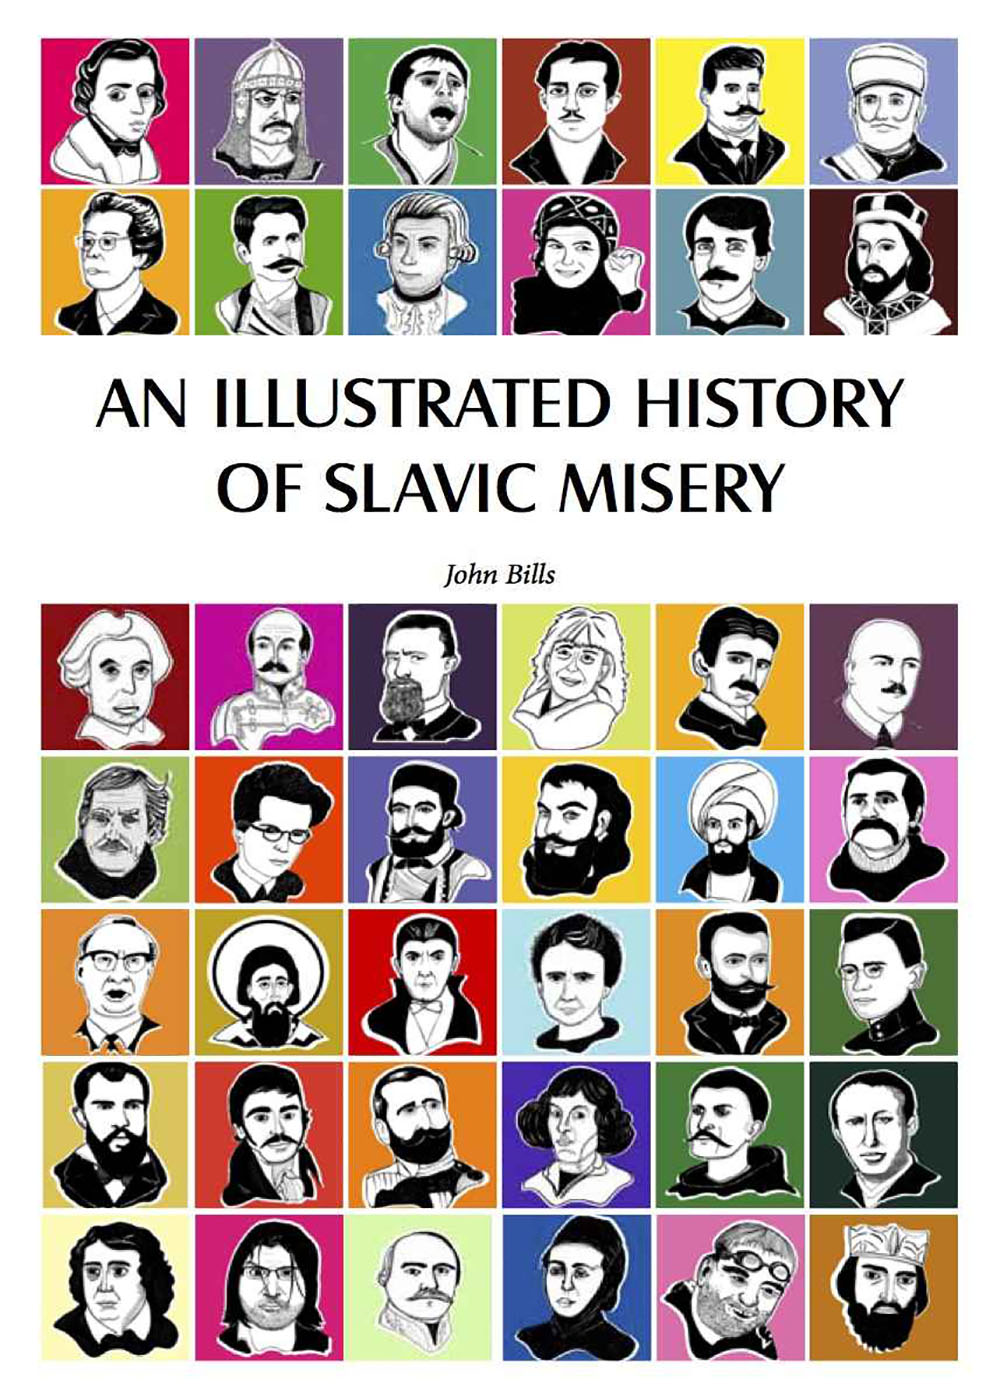 John Bills - An Illustrated History of Slavic Misery